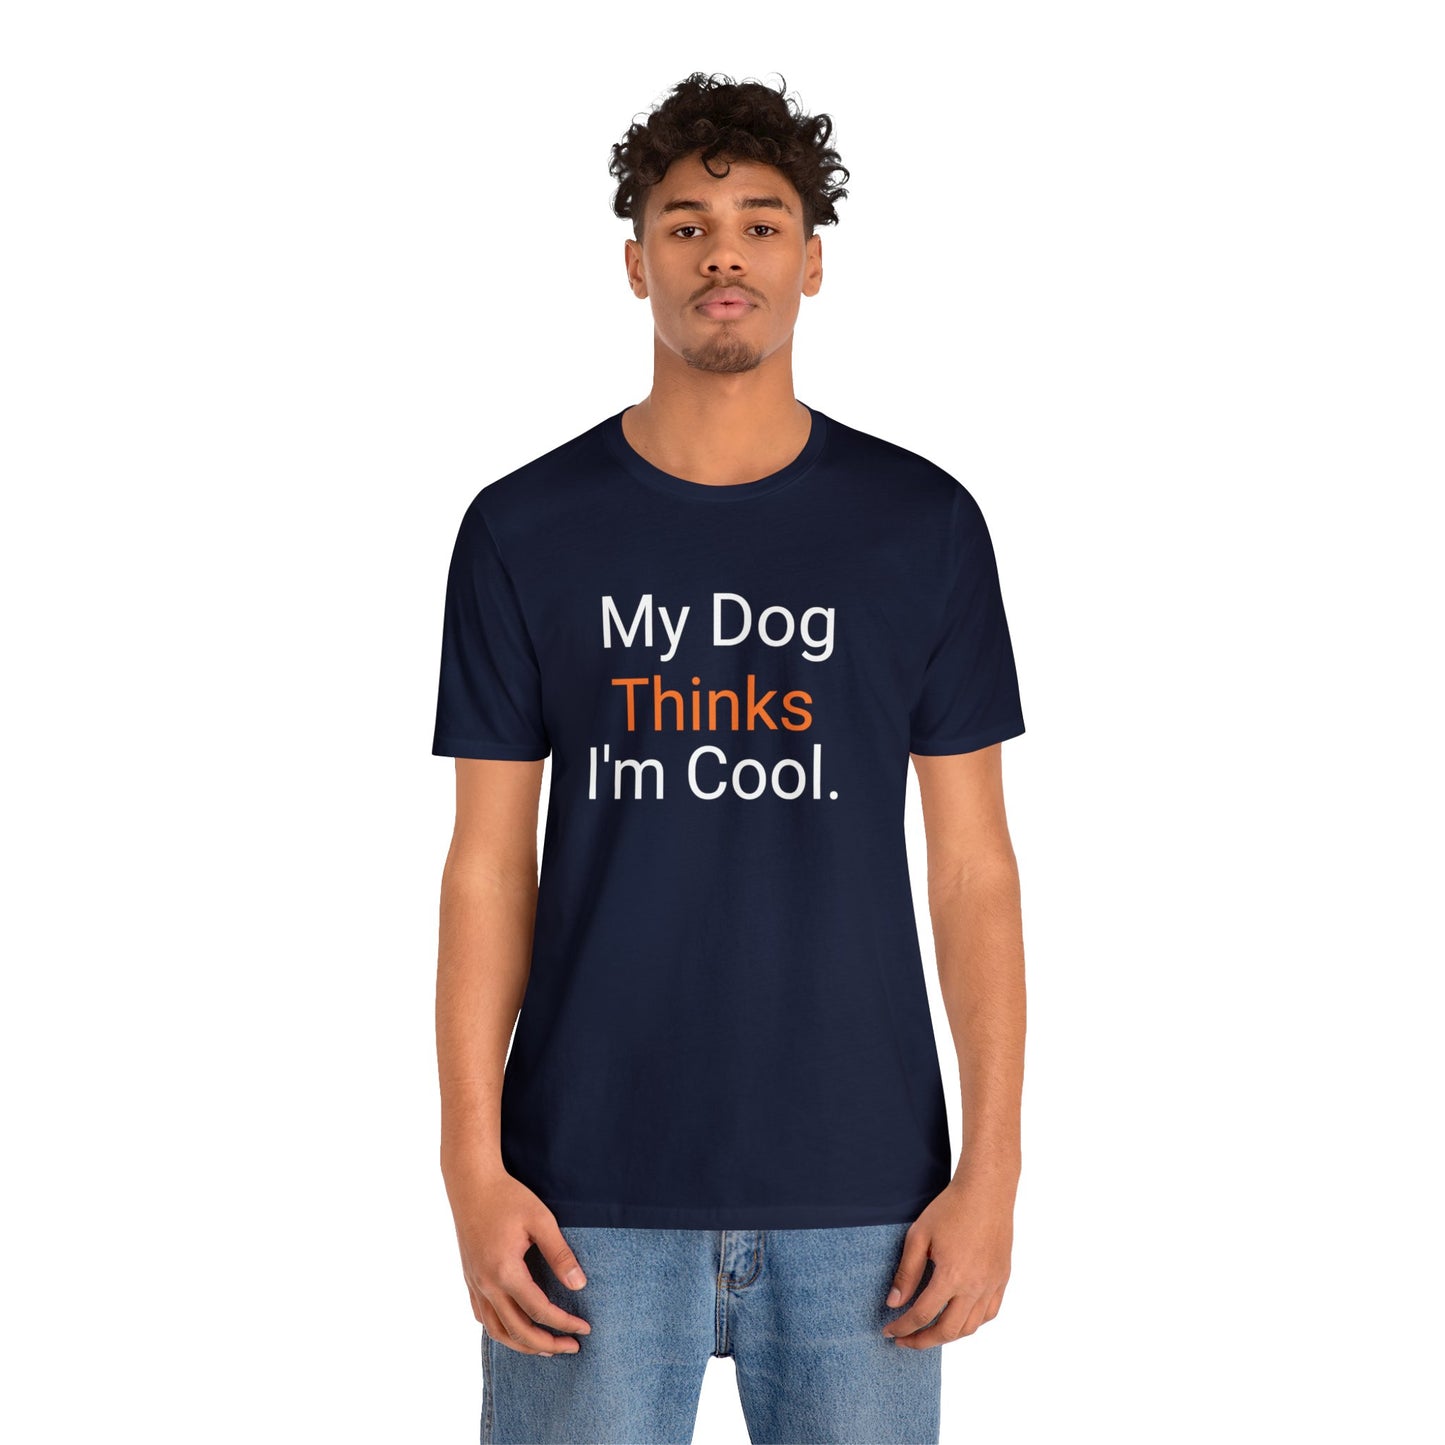 My dog Thinks I'm Cool - Funny Dog Shirts - Jersey Short Sleeve Tee